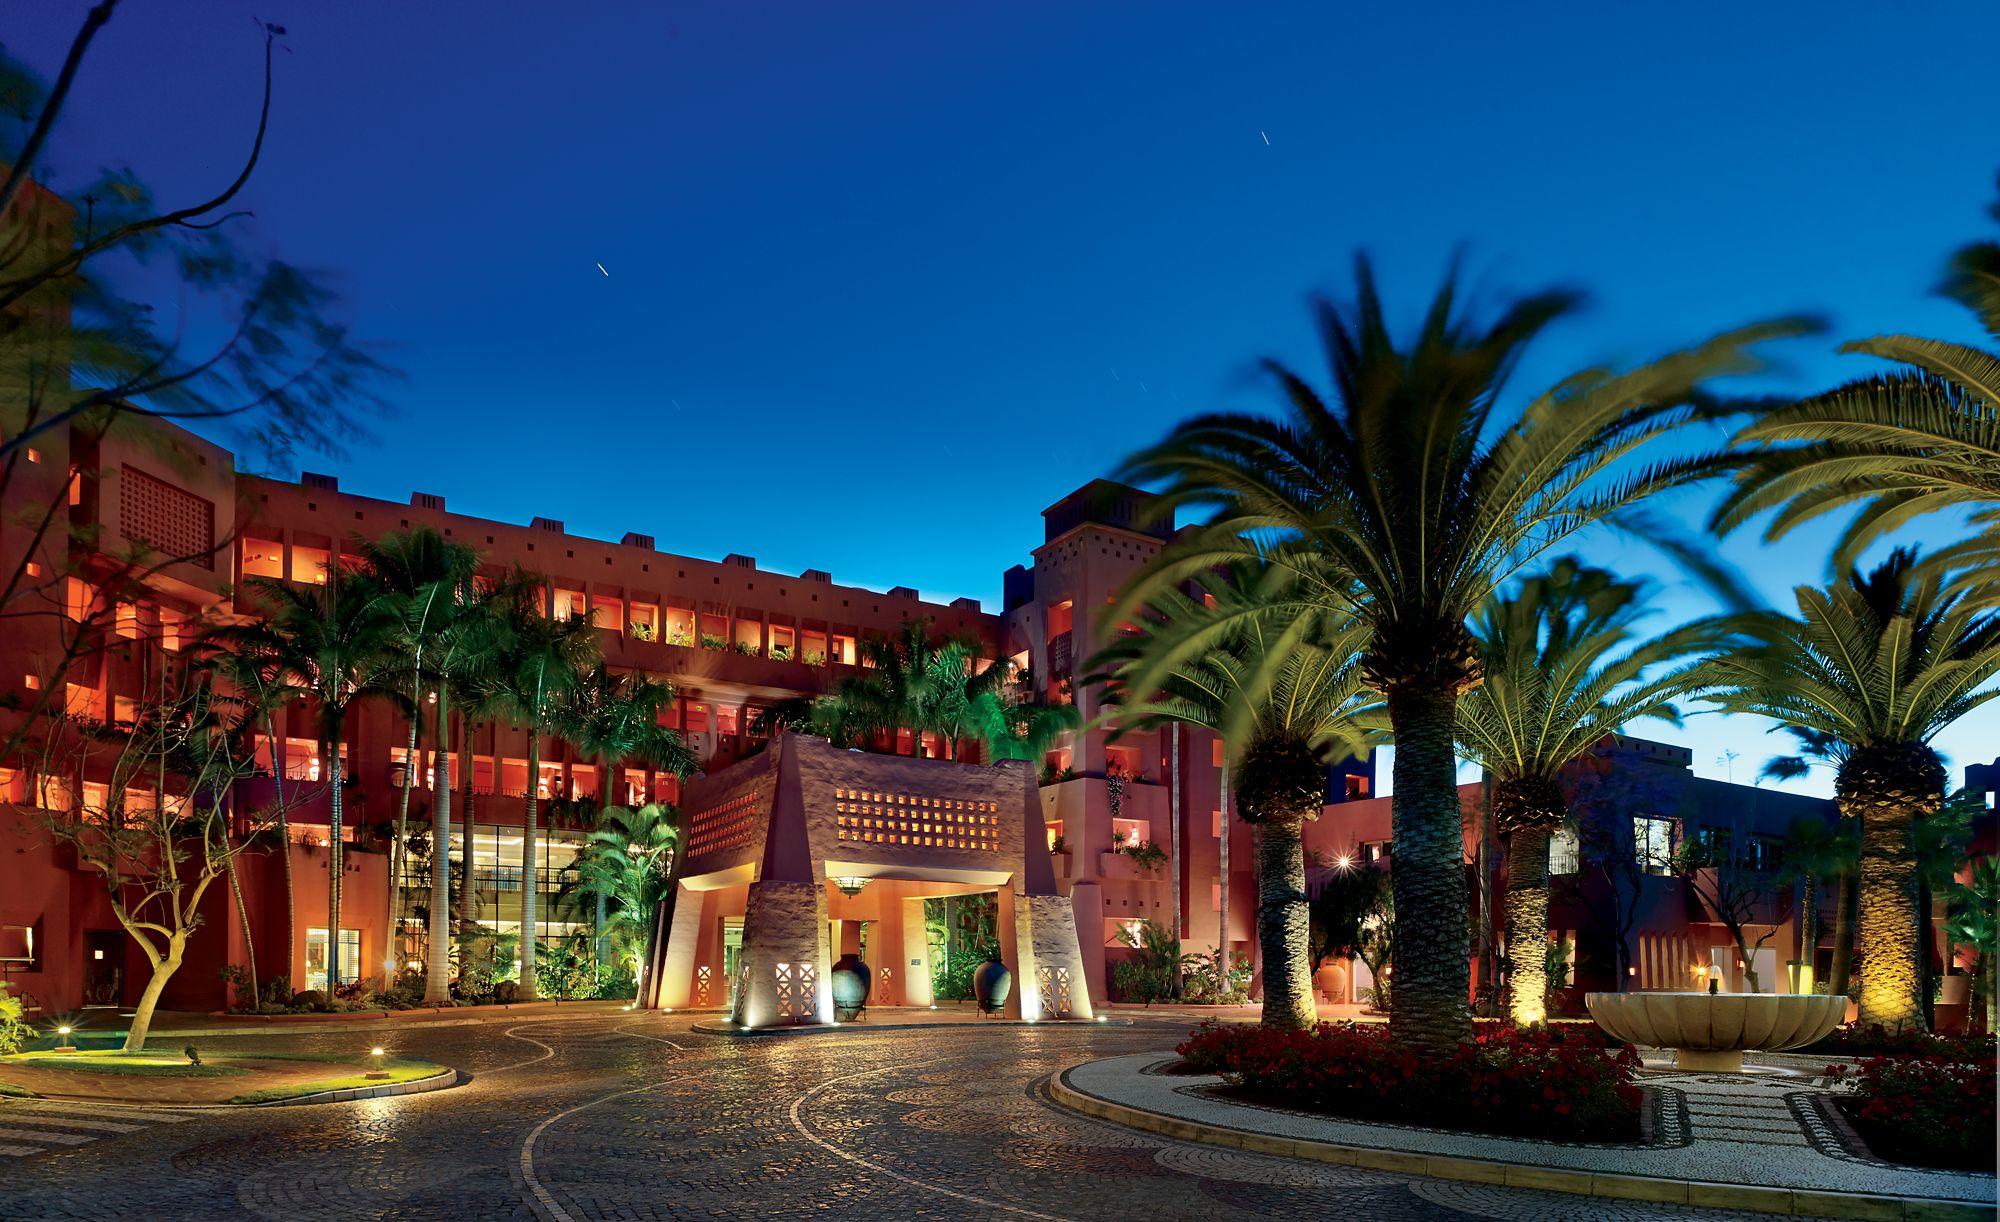 Hoteles en Tenerife